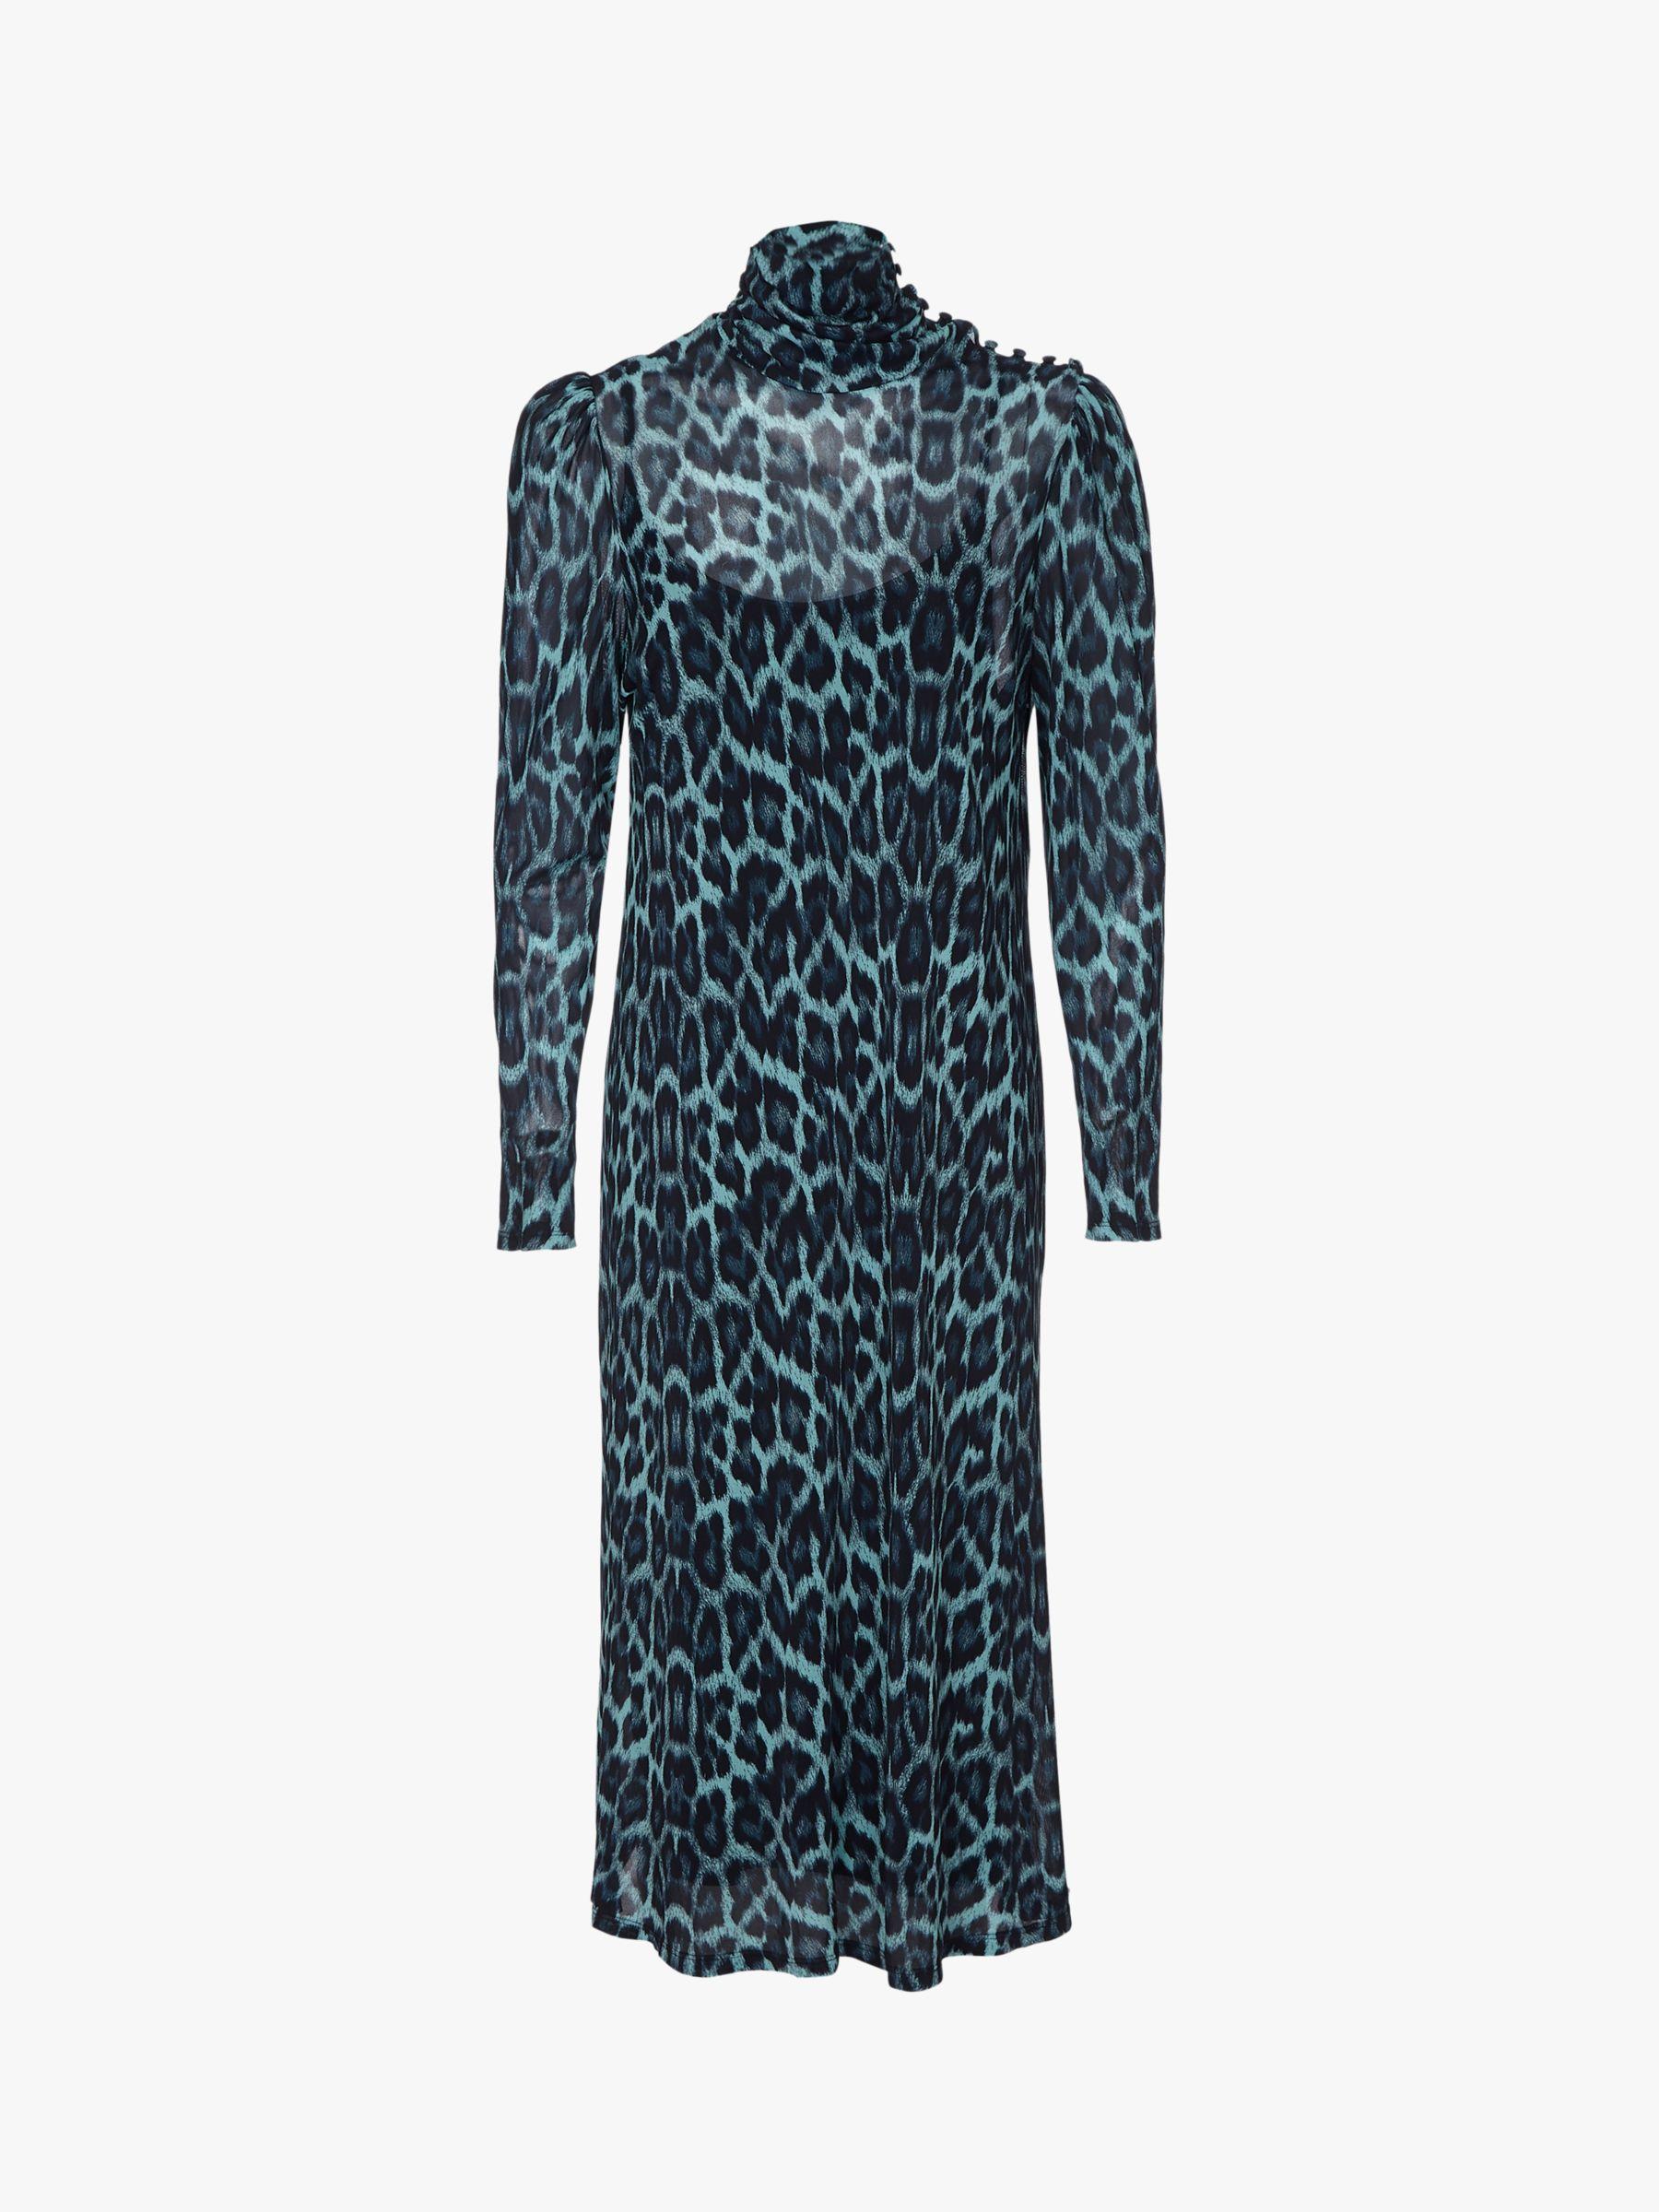 Ghost Satin Nadia Dress in Blue Leopard 